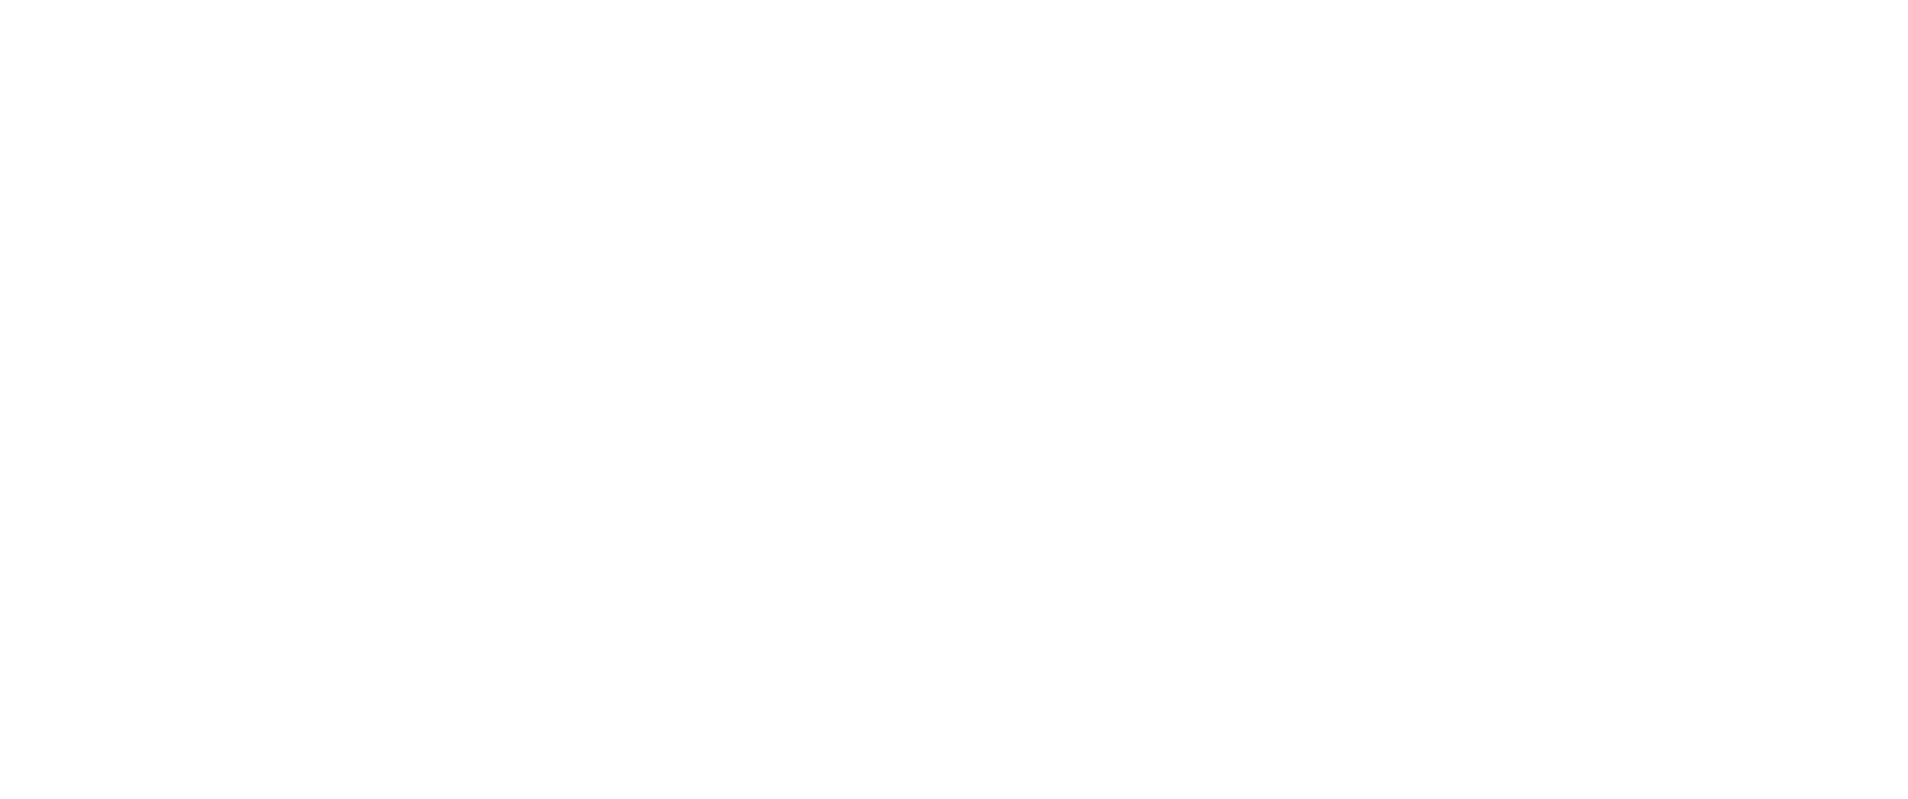 The school community